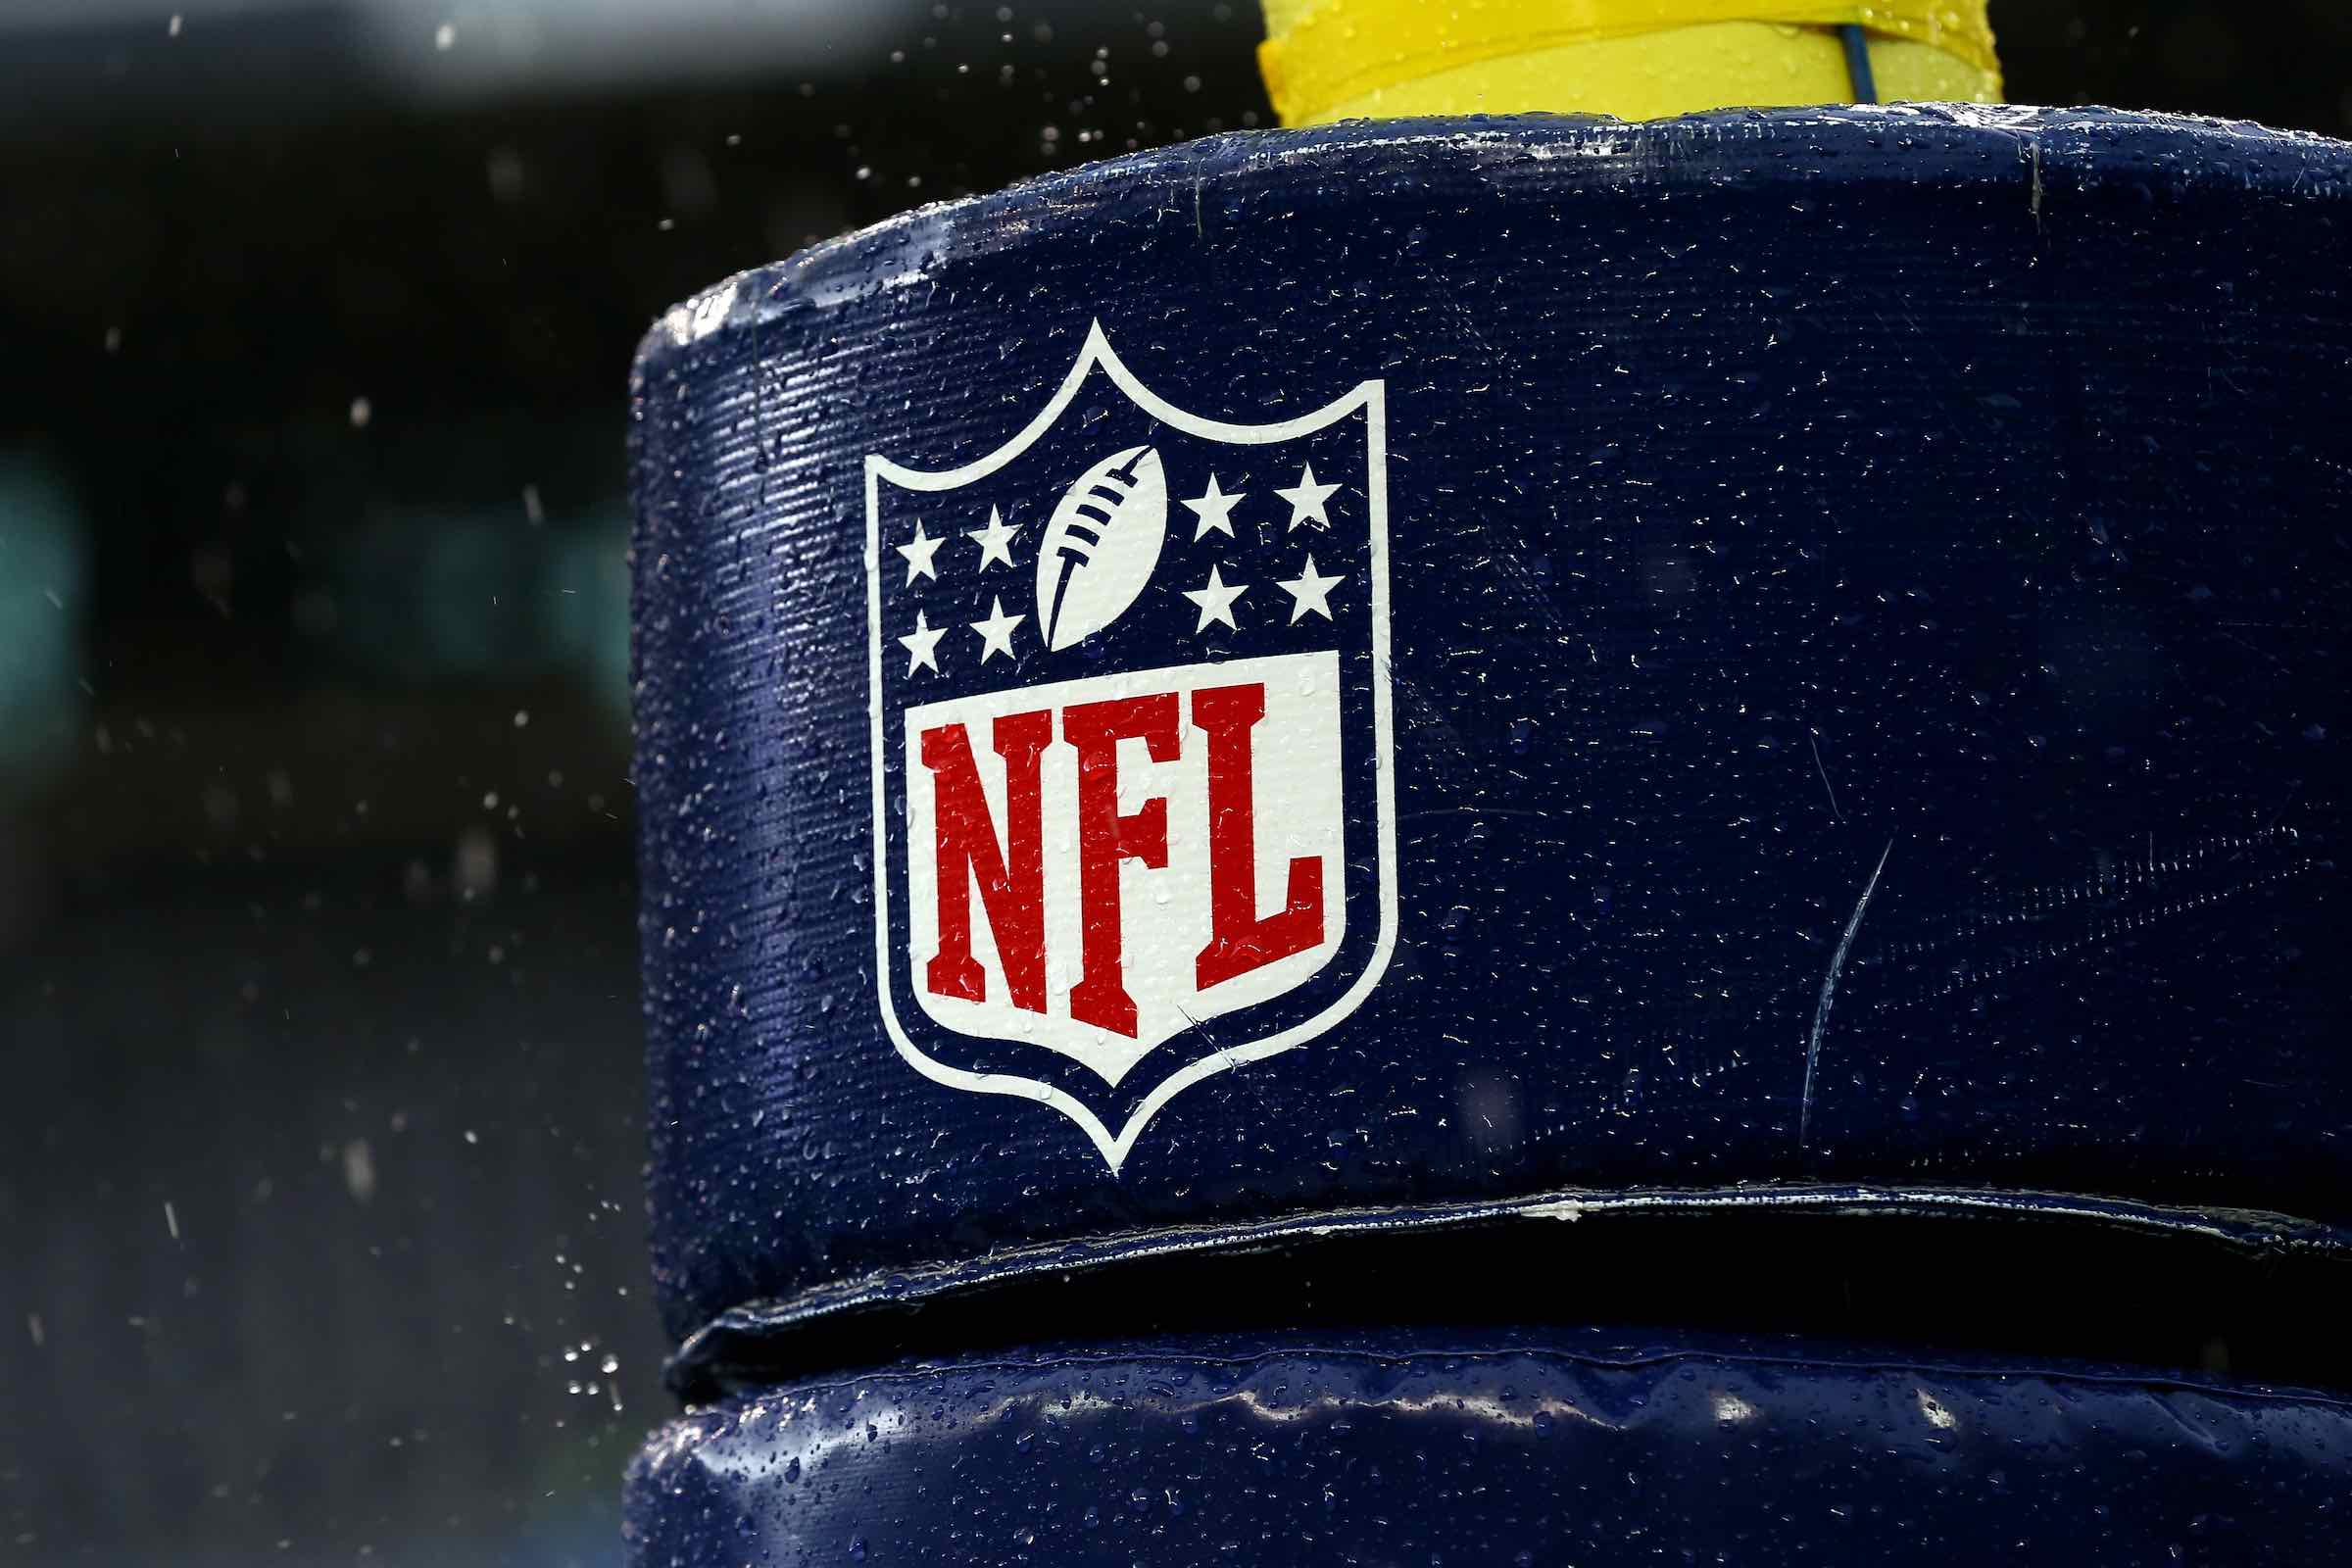 32 HQ Photos Nfl Football Live Stream Reddit Giants vs Cowboys NFL